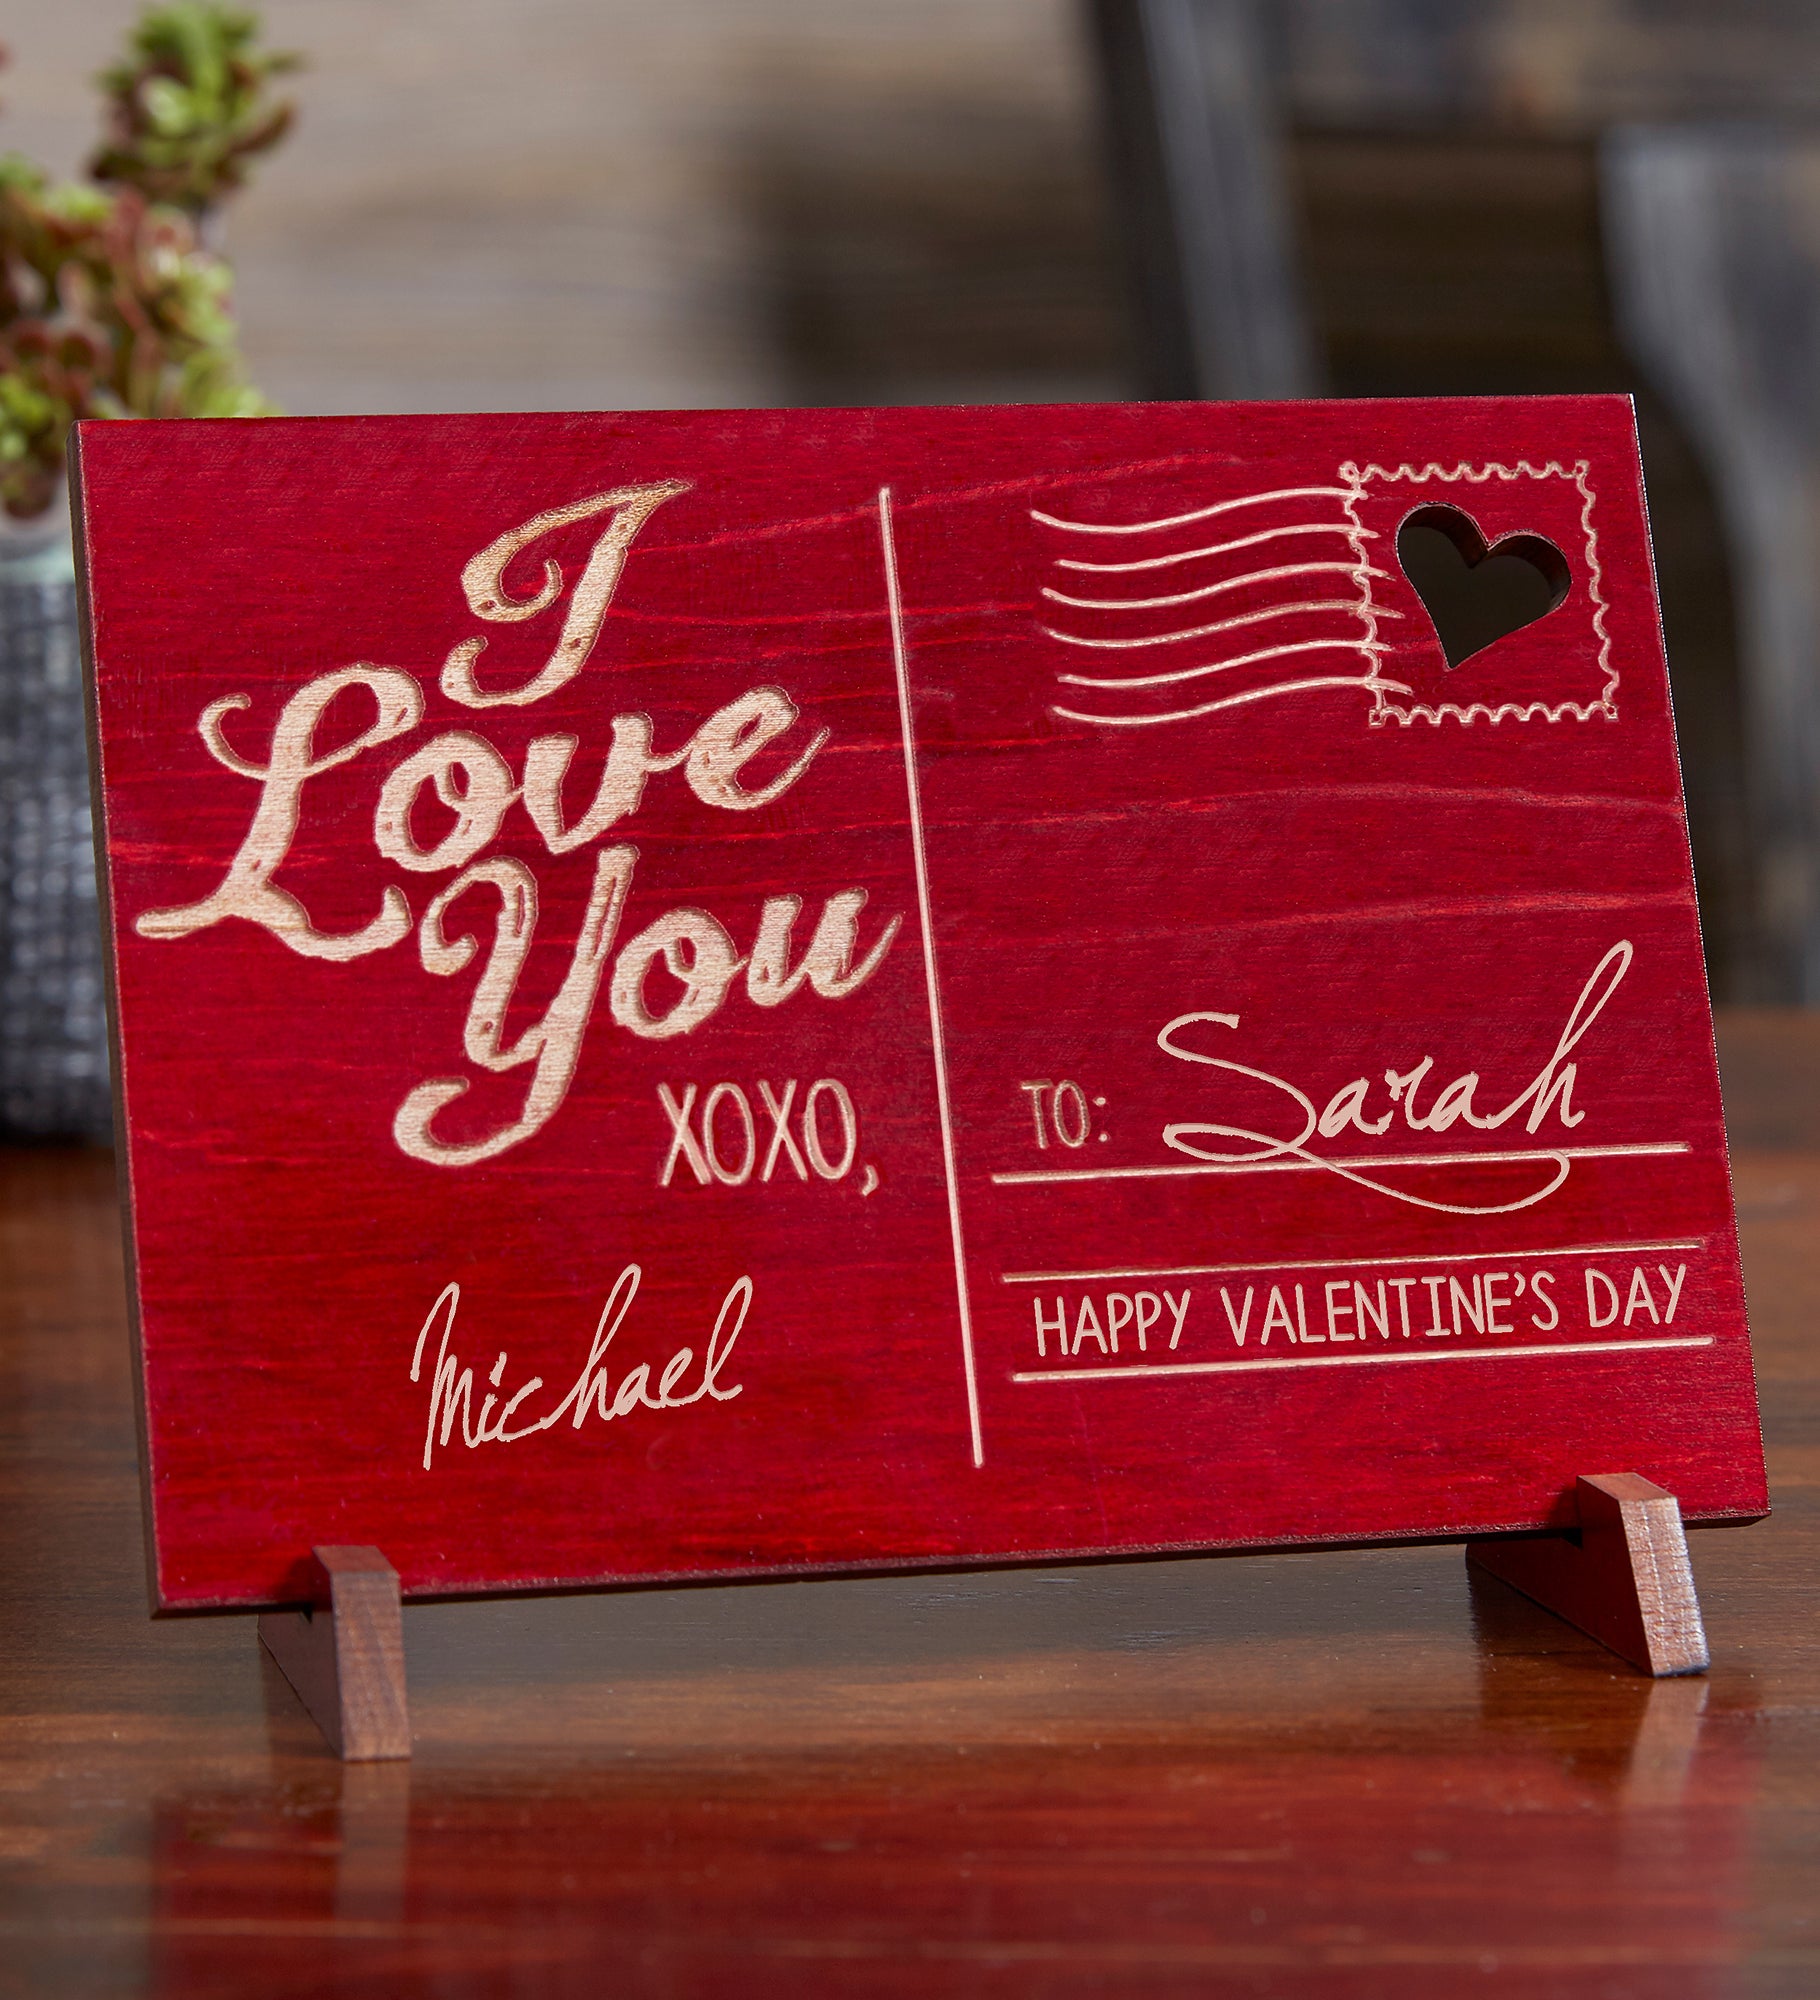 Sending Love Personalized Wood Postcard